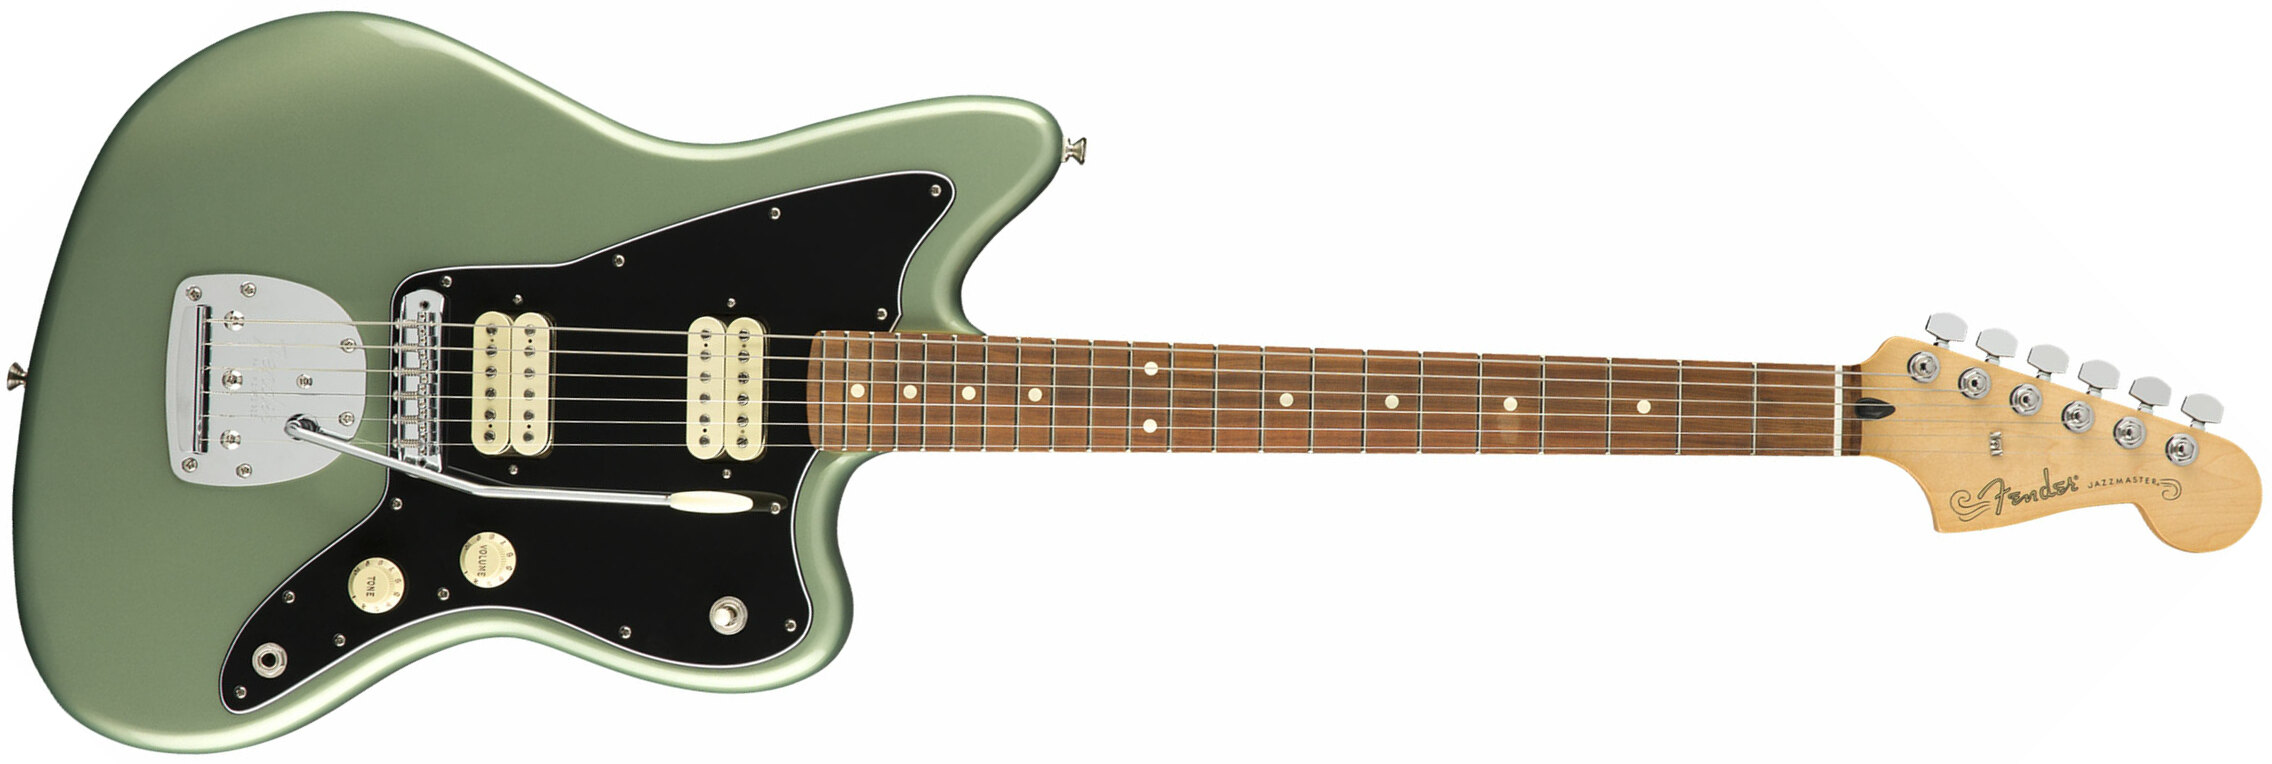 Fender Jazzmaster Player Mex Hh Pf - Sage Green Metallic - Retro rock electric guitar - Main picture